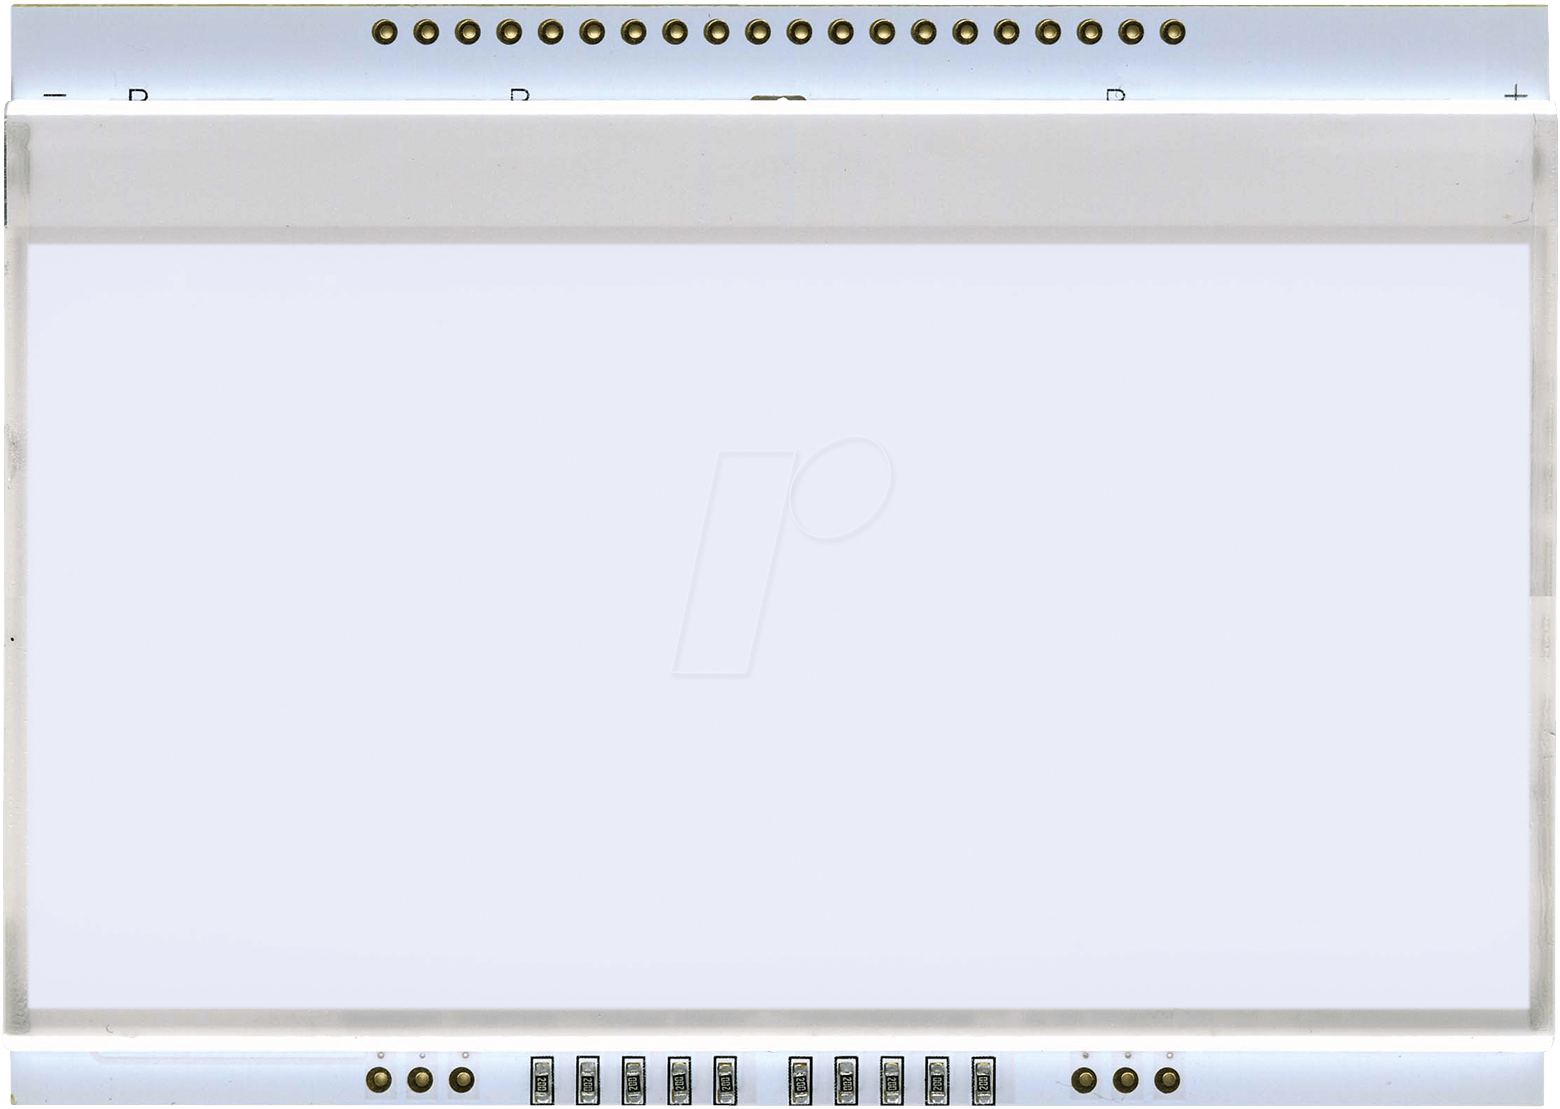 EA LED94X67-W - LED-Beleuchtung für DOGXL240, 91 x 47,7 mm, weiß von DISPLAY VISIONS